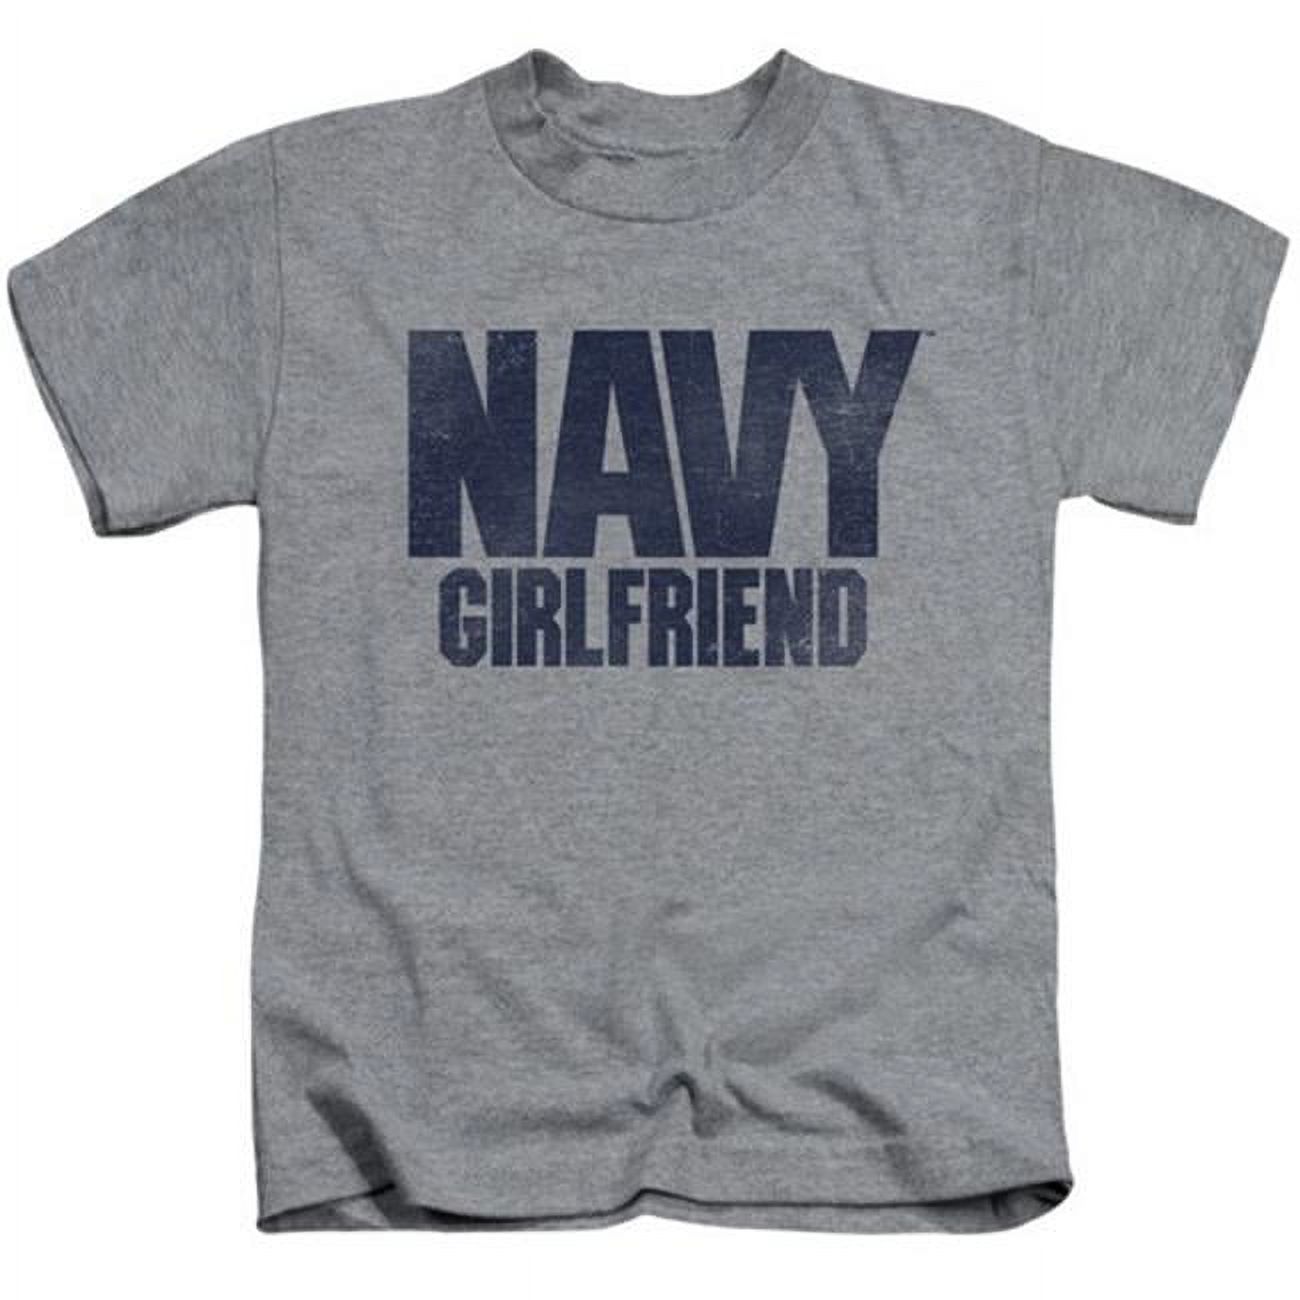 Trevco Navy-Girlfriend Short Sleeve Juvenile 18-1 Tee- Athletic Heather - Medium 5-6 - image 1 of 1